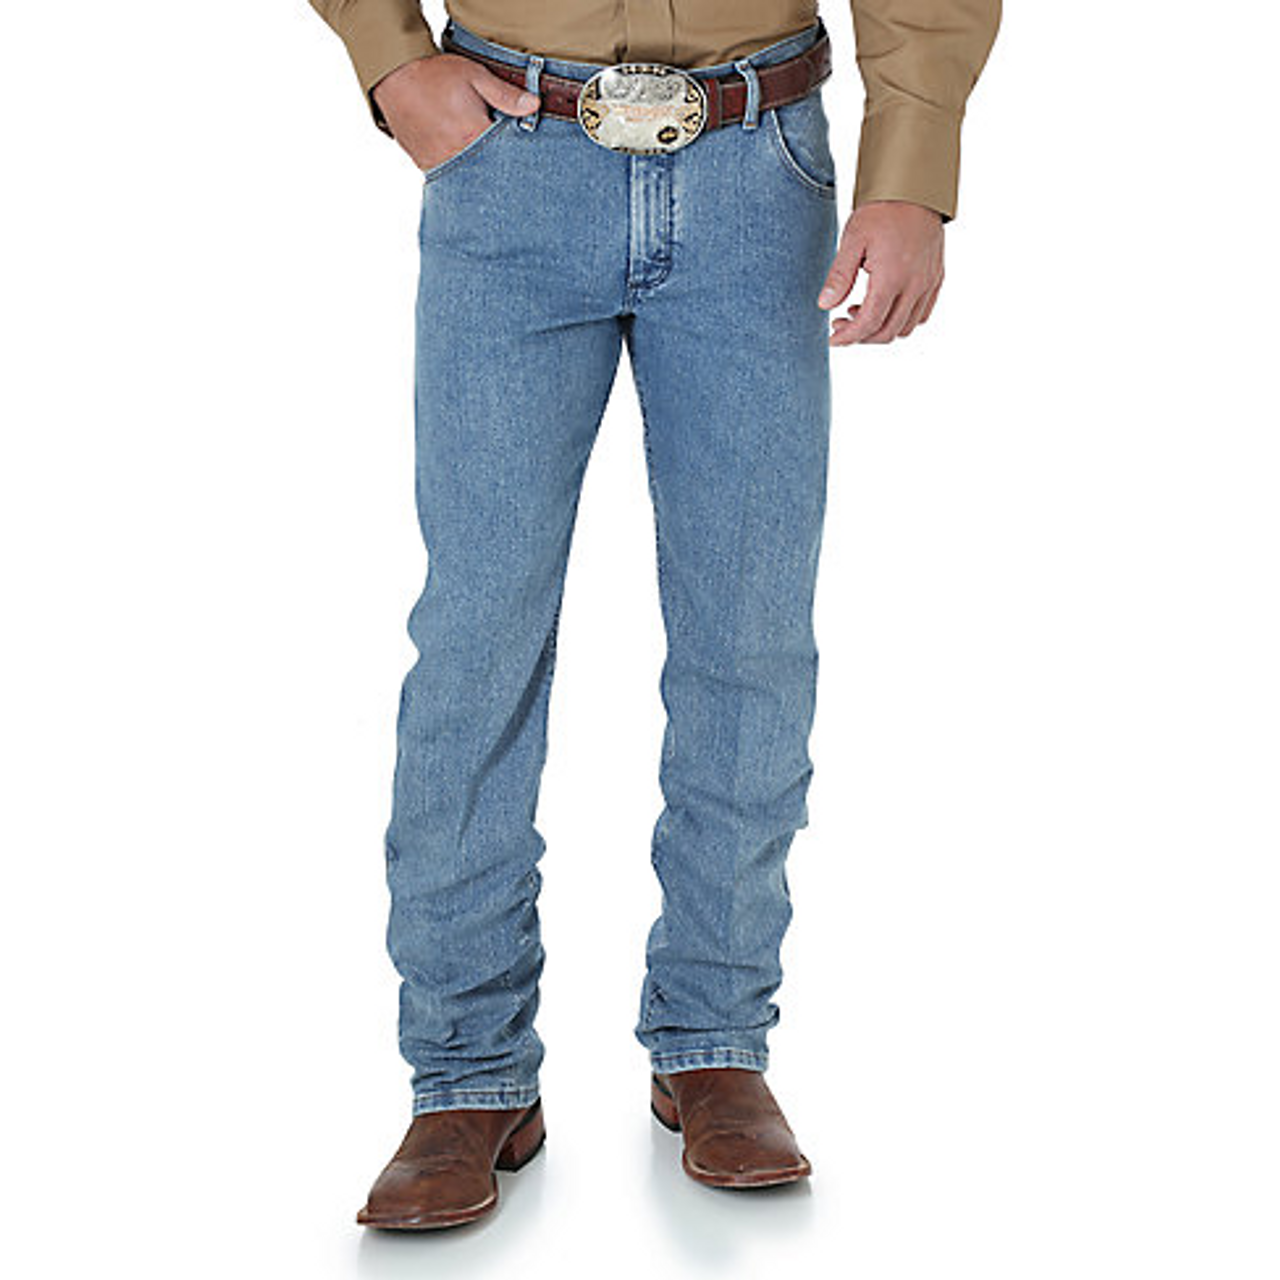 Wrangler Mens Jeans - Premium Performance Advanced Comfort - Stone ...